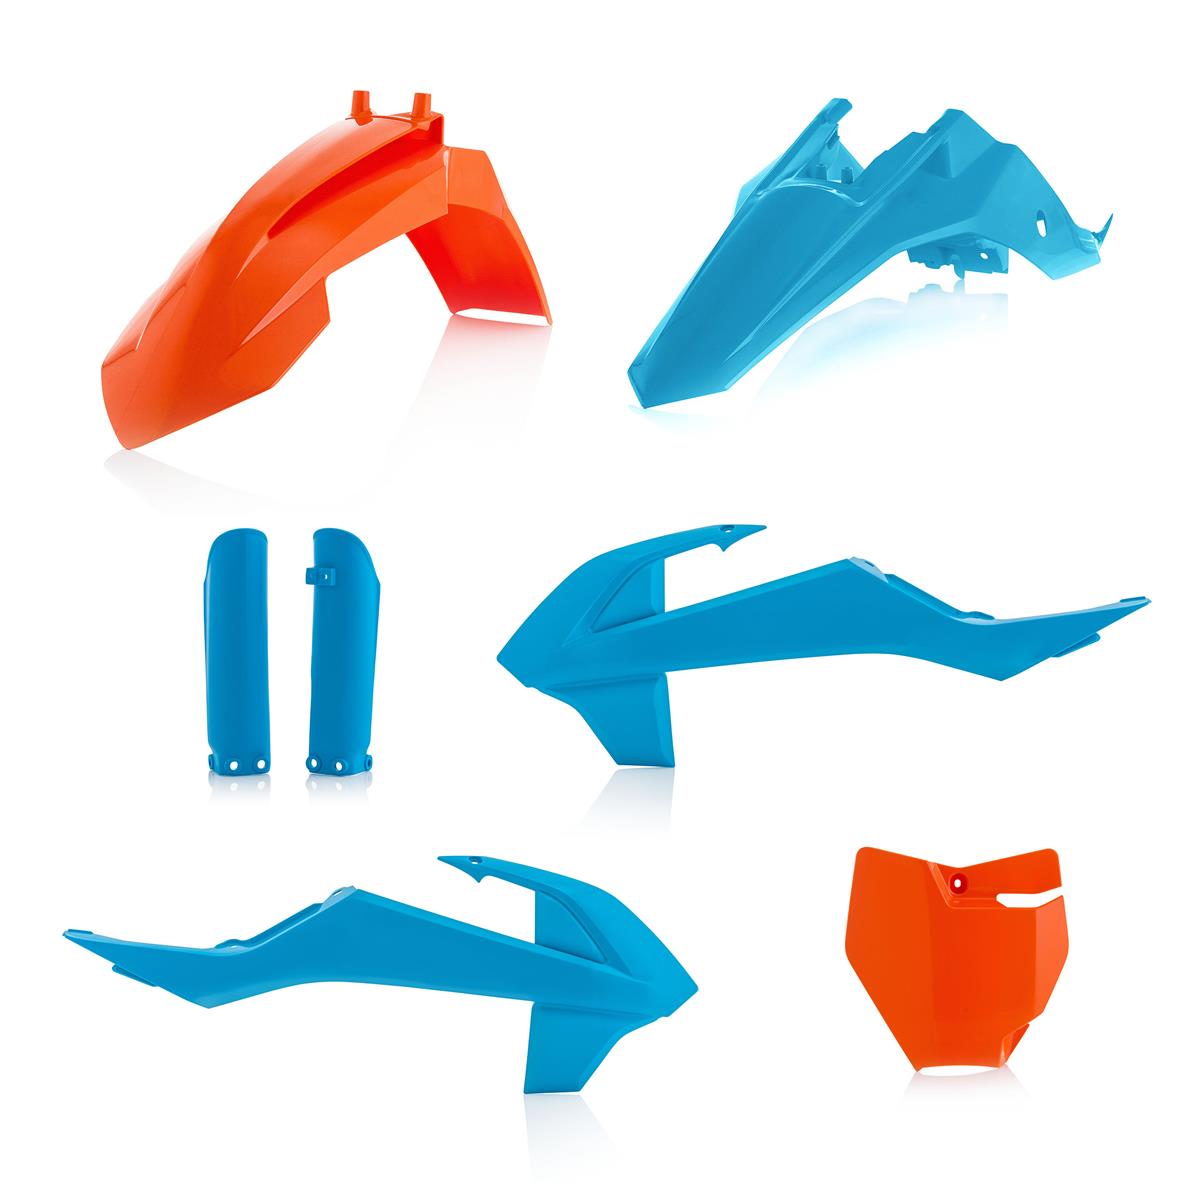 Acerbis Kit Plastiche completo Full-Kit KTM SX 65 16-18, Arancione/Blu